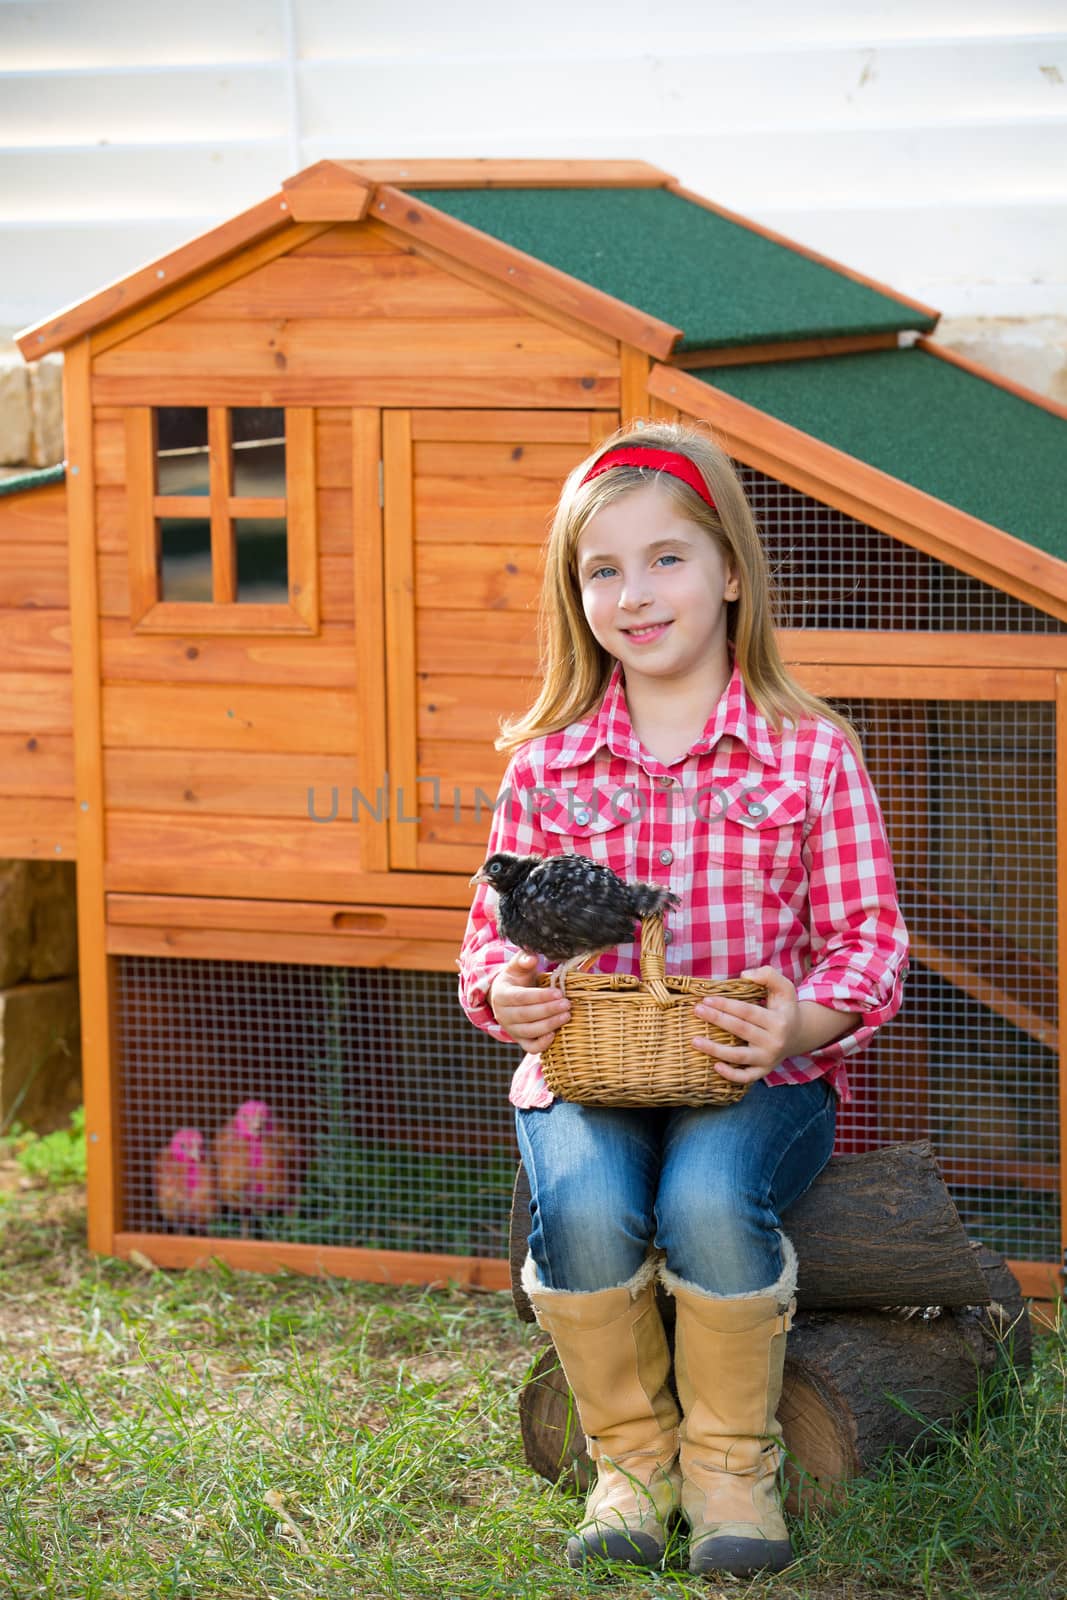 breeder hens kid girl rancher blond farmer playing with chicks in chicken hencoop